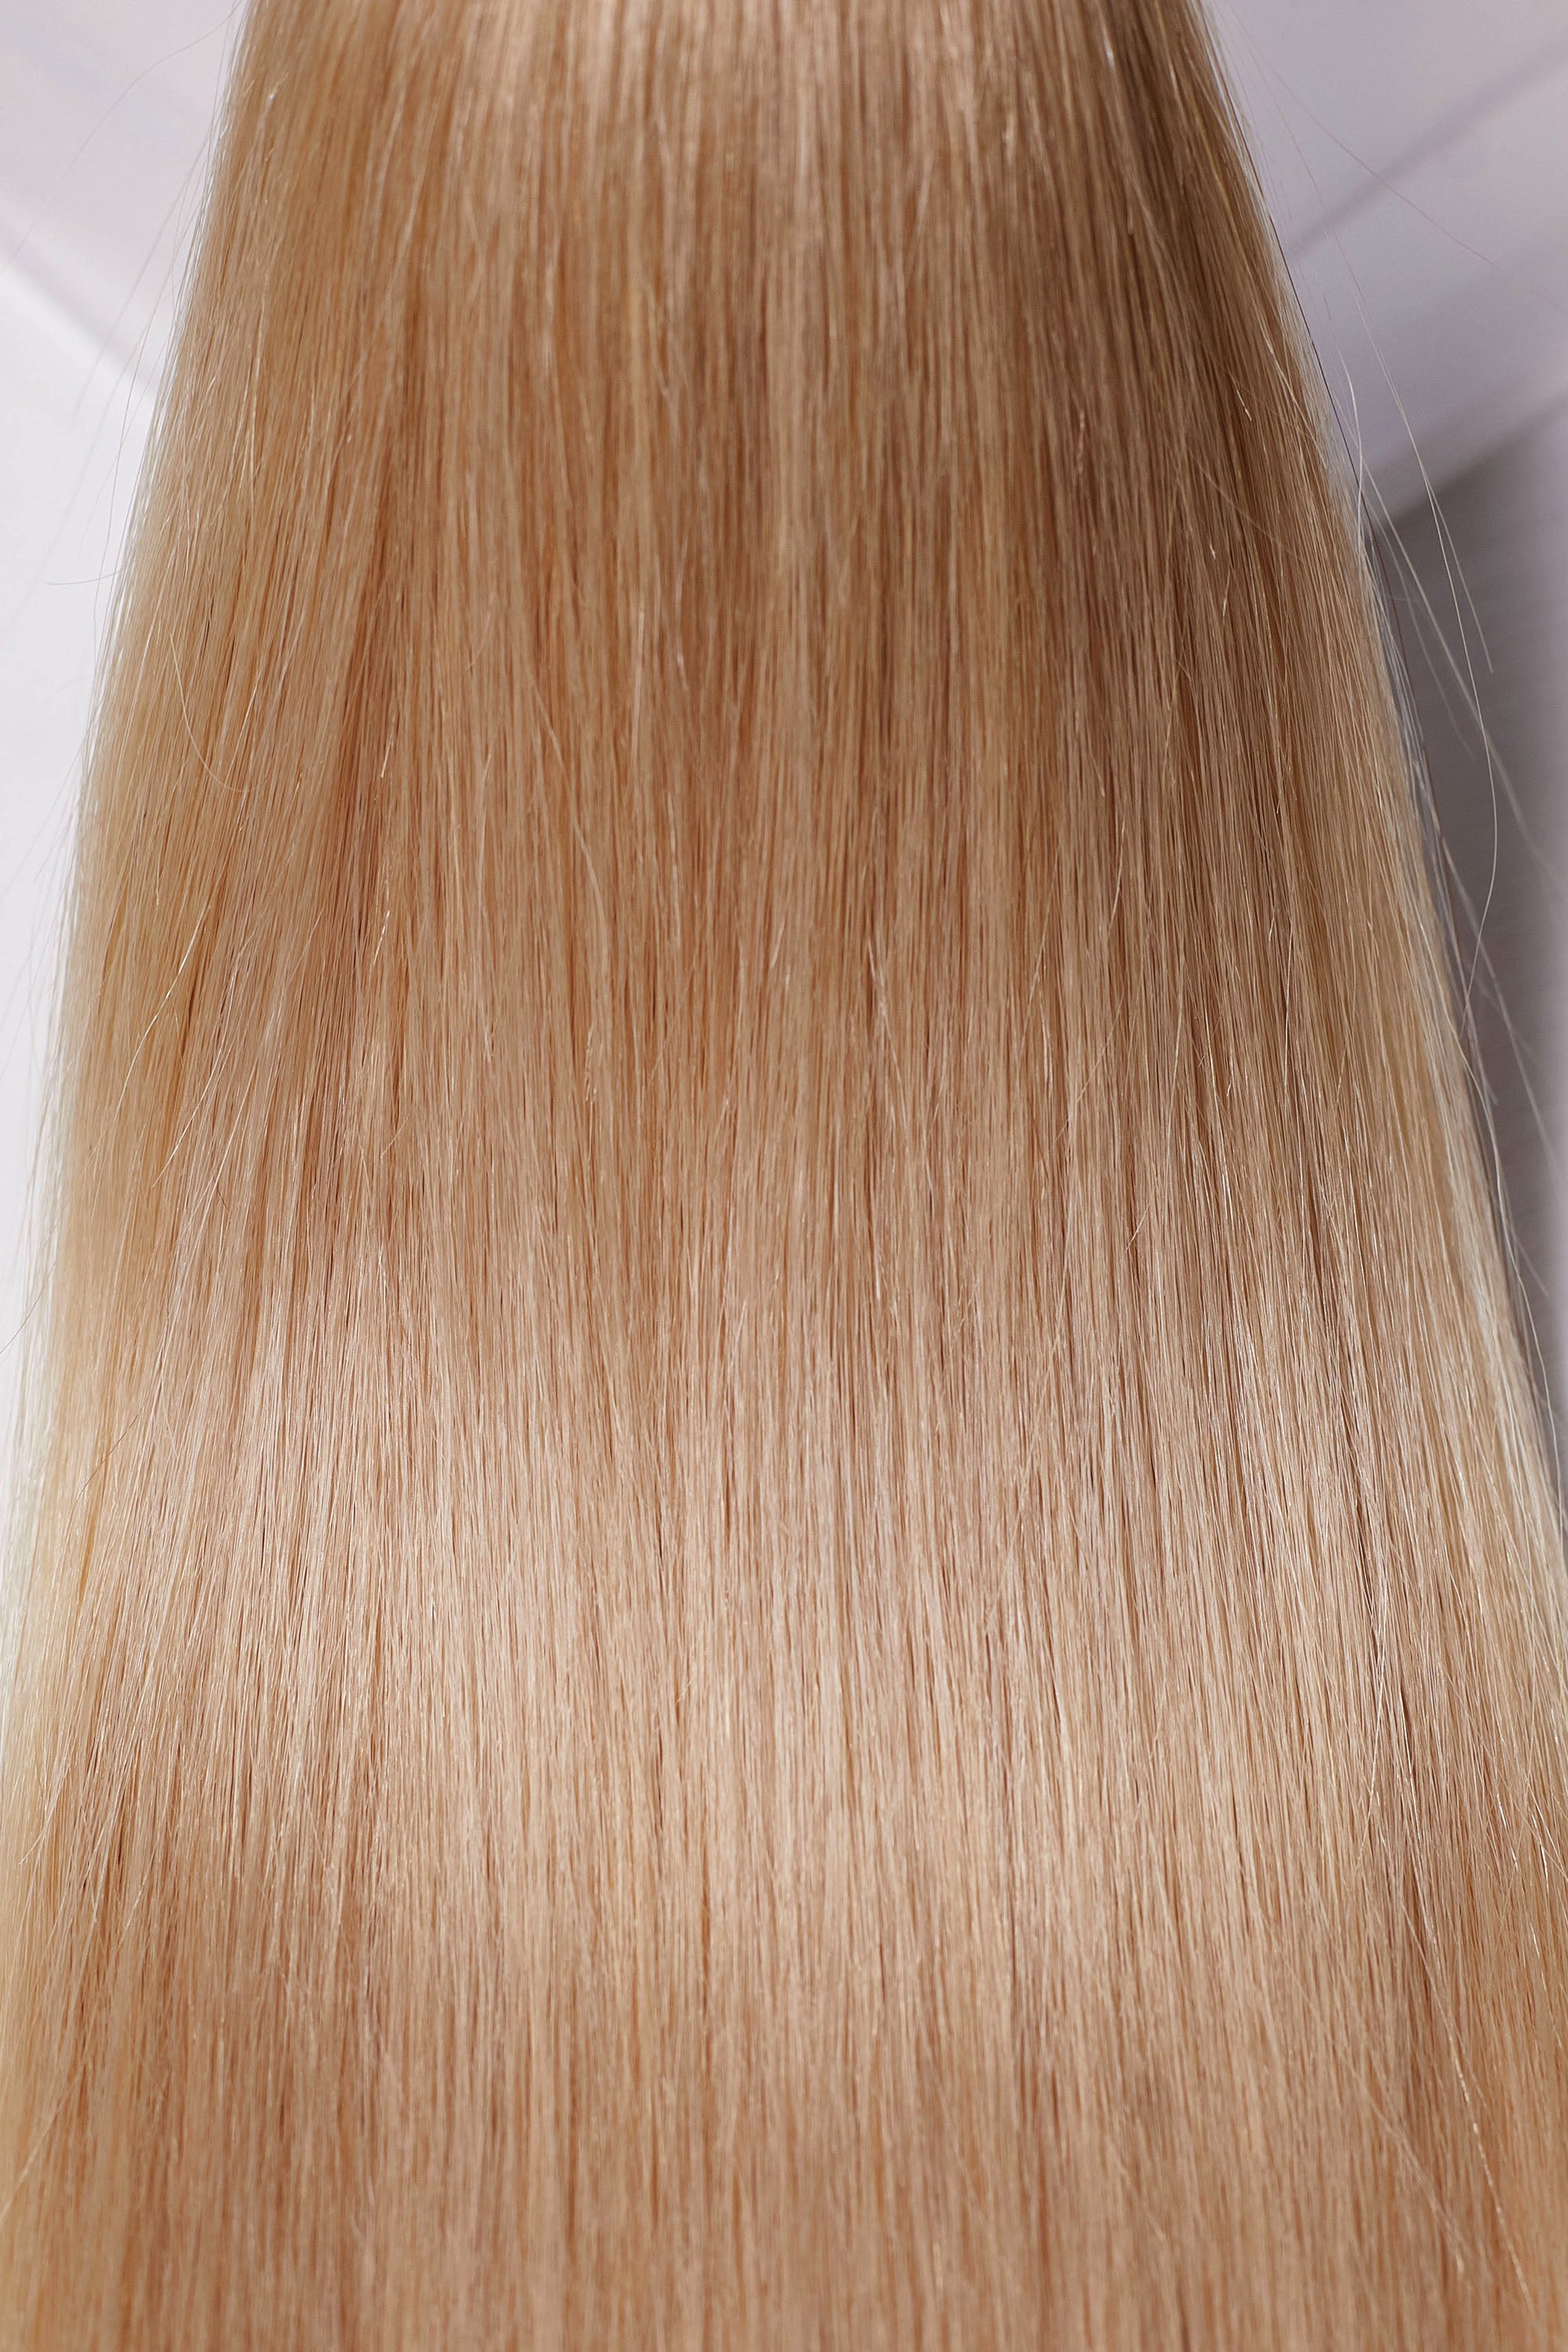 Behair professional Keratin Tip "Premium" 26" (65cm) Natural Straight Light Gold Sand #16 - 25g (Micro - 0.5g each pcs) hair extensions